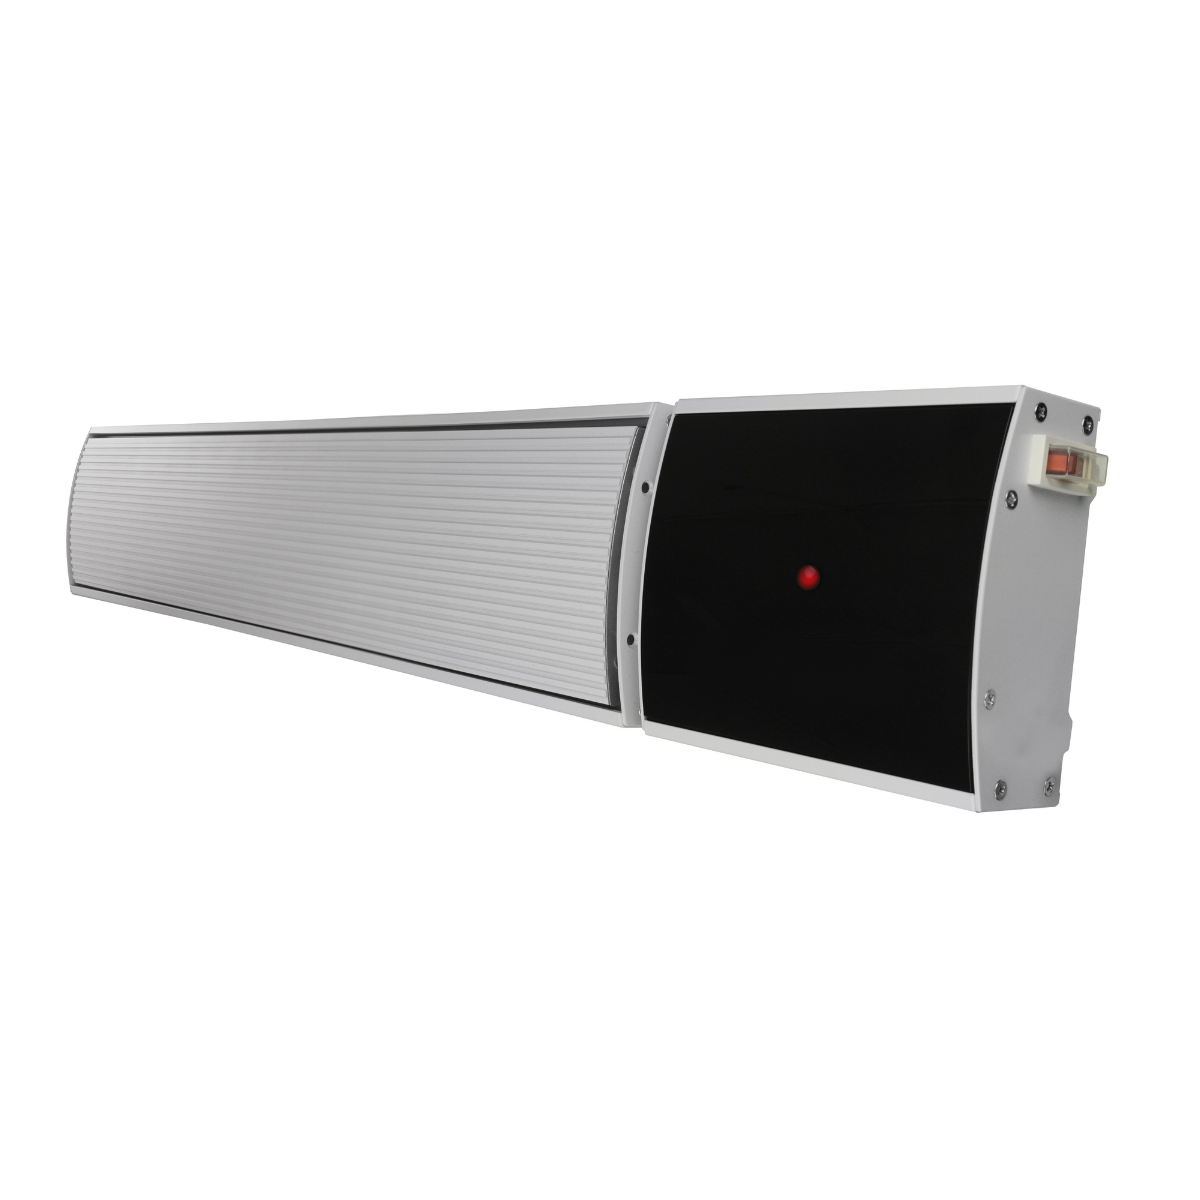 1.2kW Zenos Infrared Bar Heater